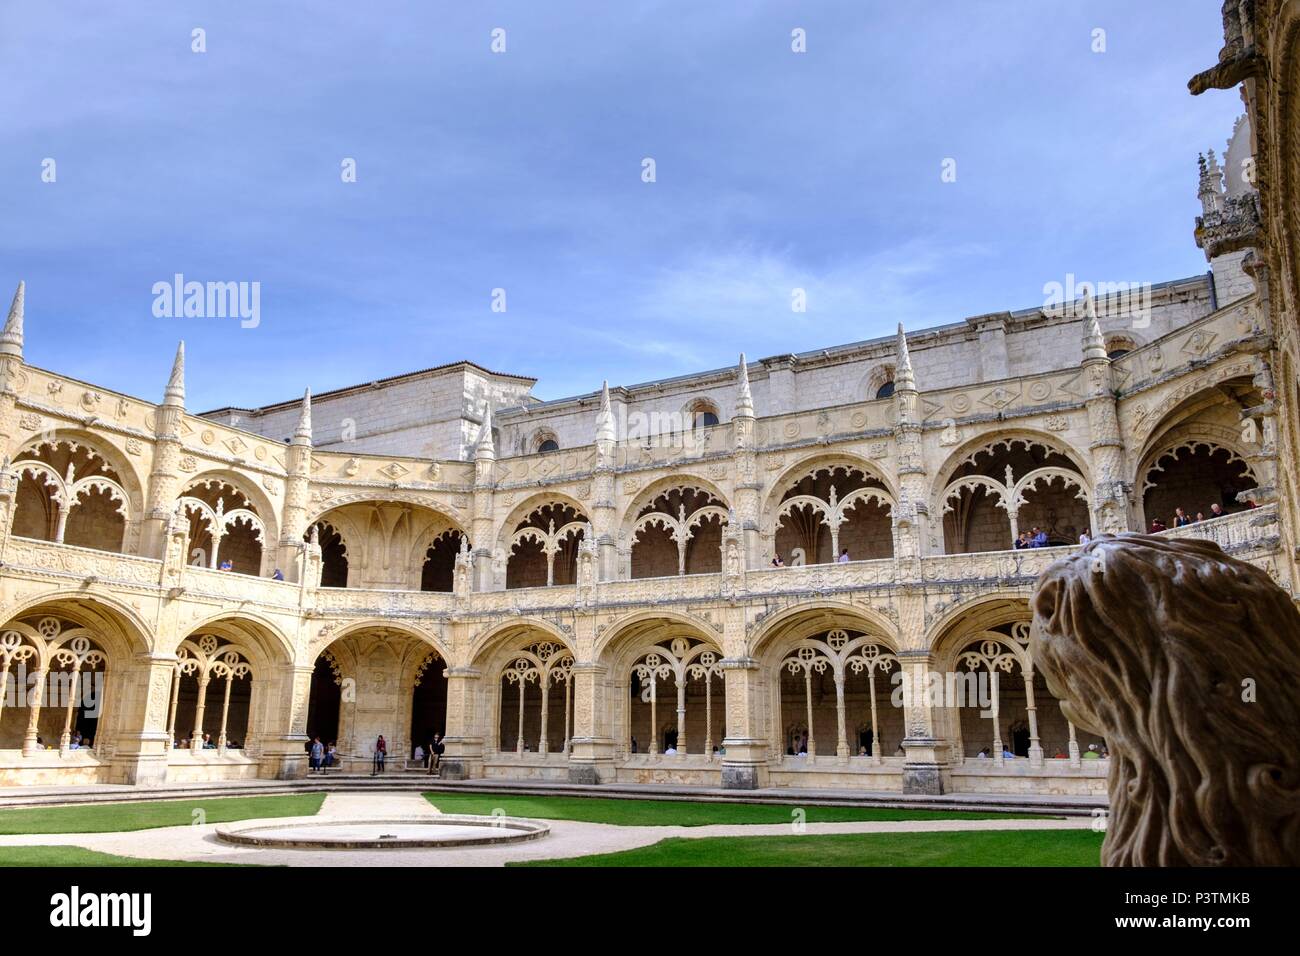 Mosteiro dos Jeronimos Cloisters, Belem District, Lisbon, Portugal Stock Photo